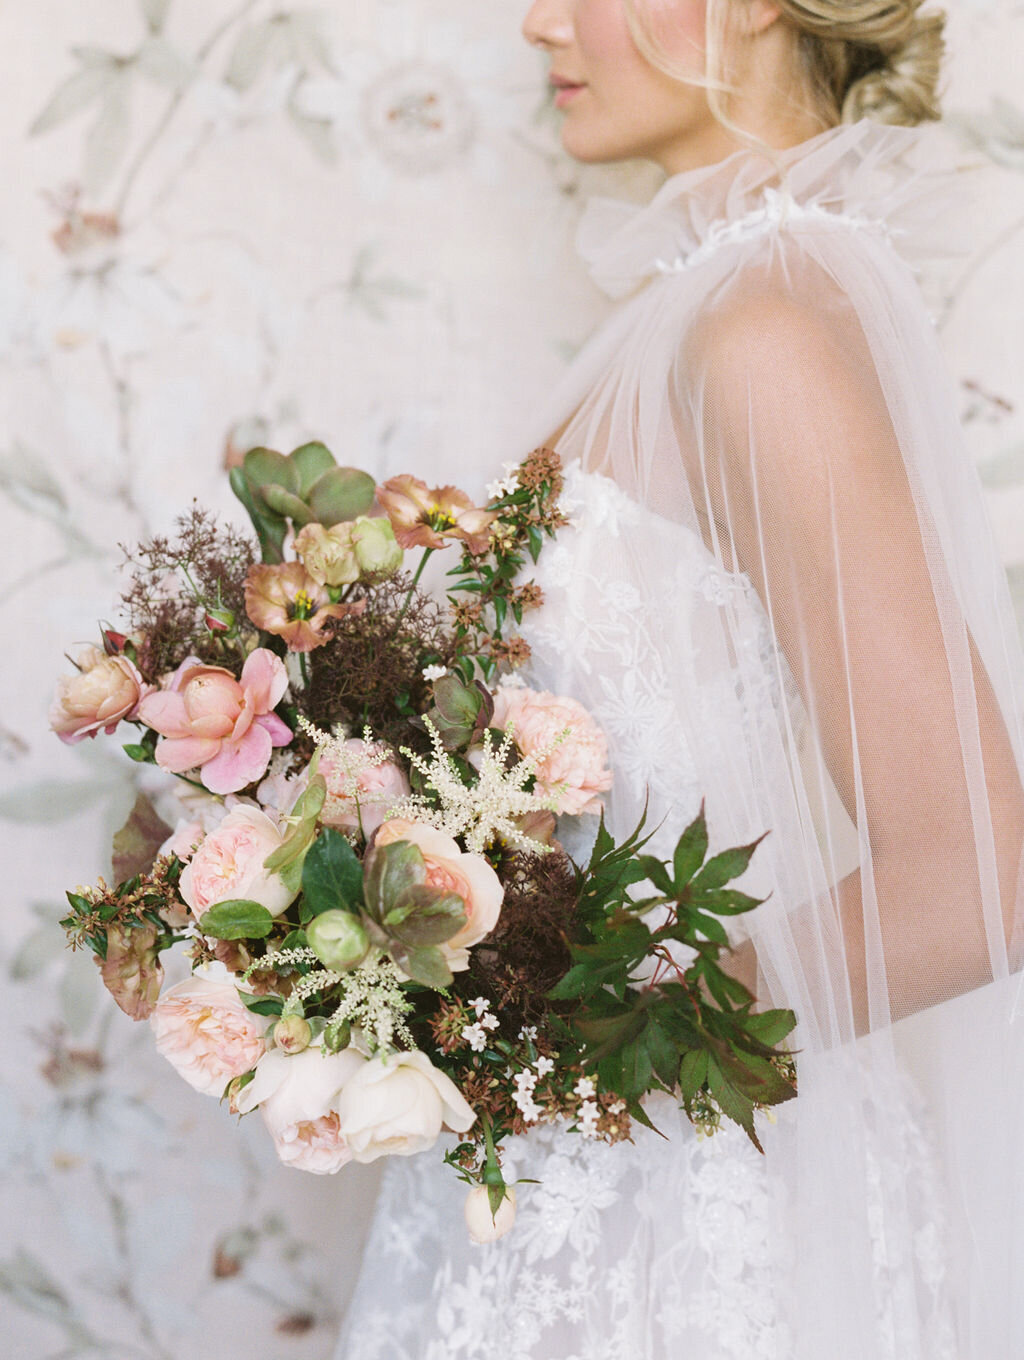 max-owens-design-english-floral-wedding-01-blush-bouquet